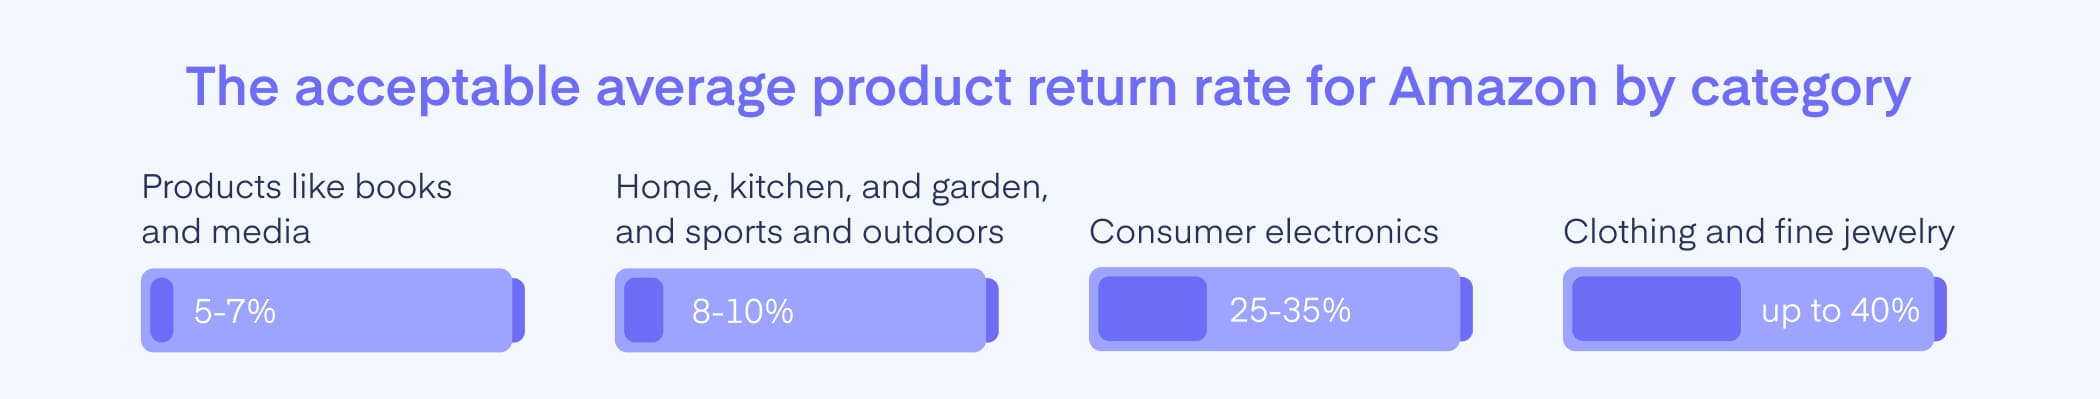 Amazon Acceptable Average Product Return Rate